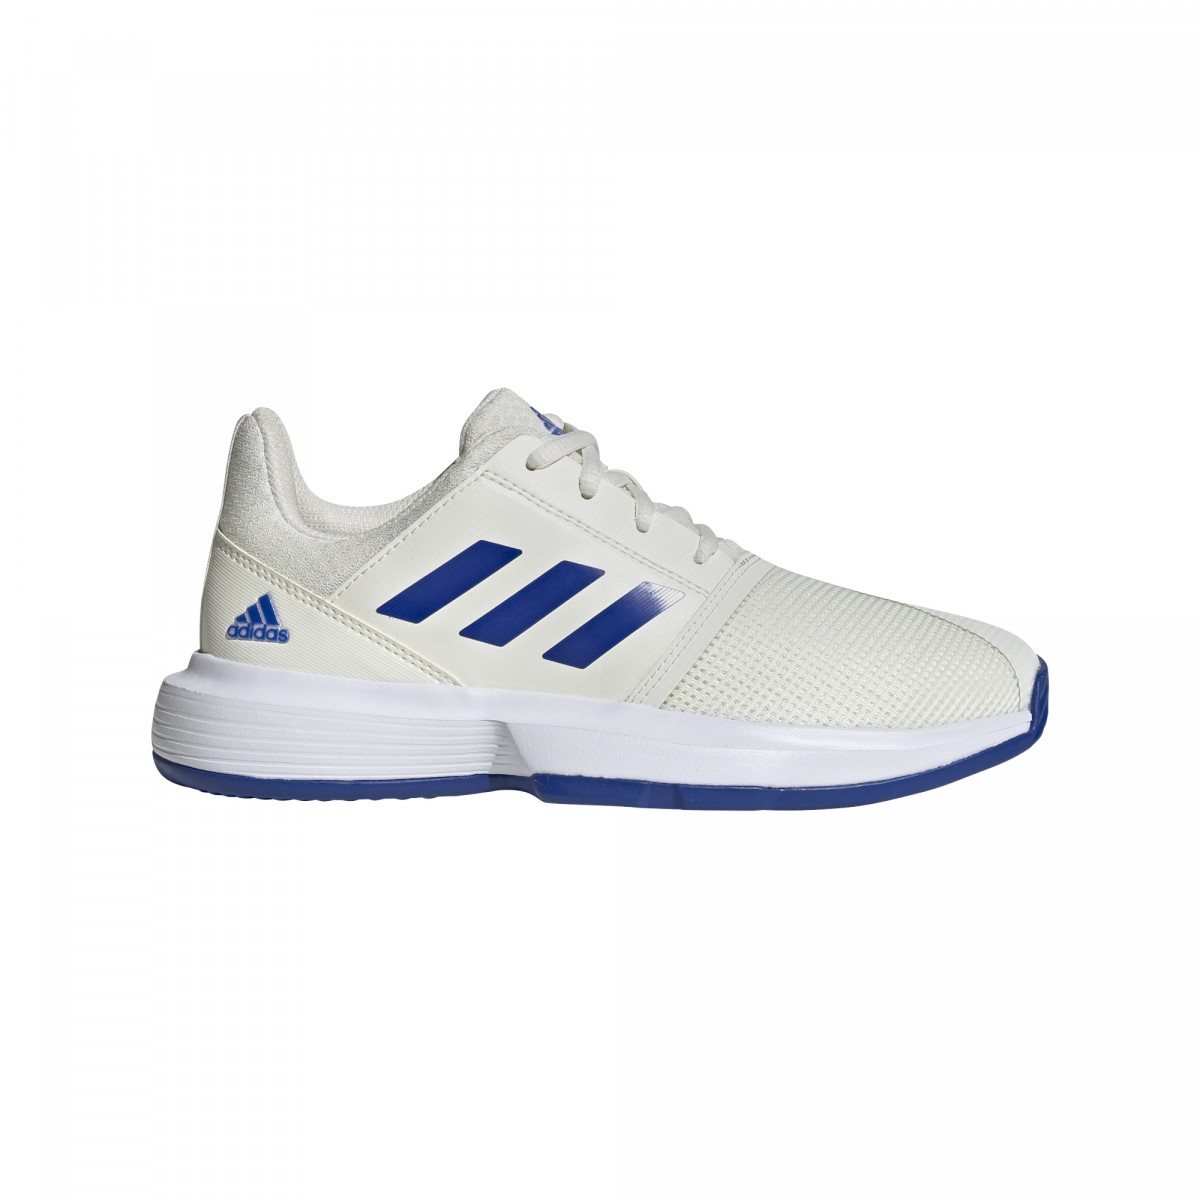 Детские теннисные кроссовки adidas CourtJam Junior white/royal blue/white